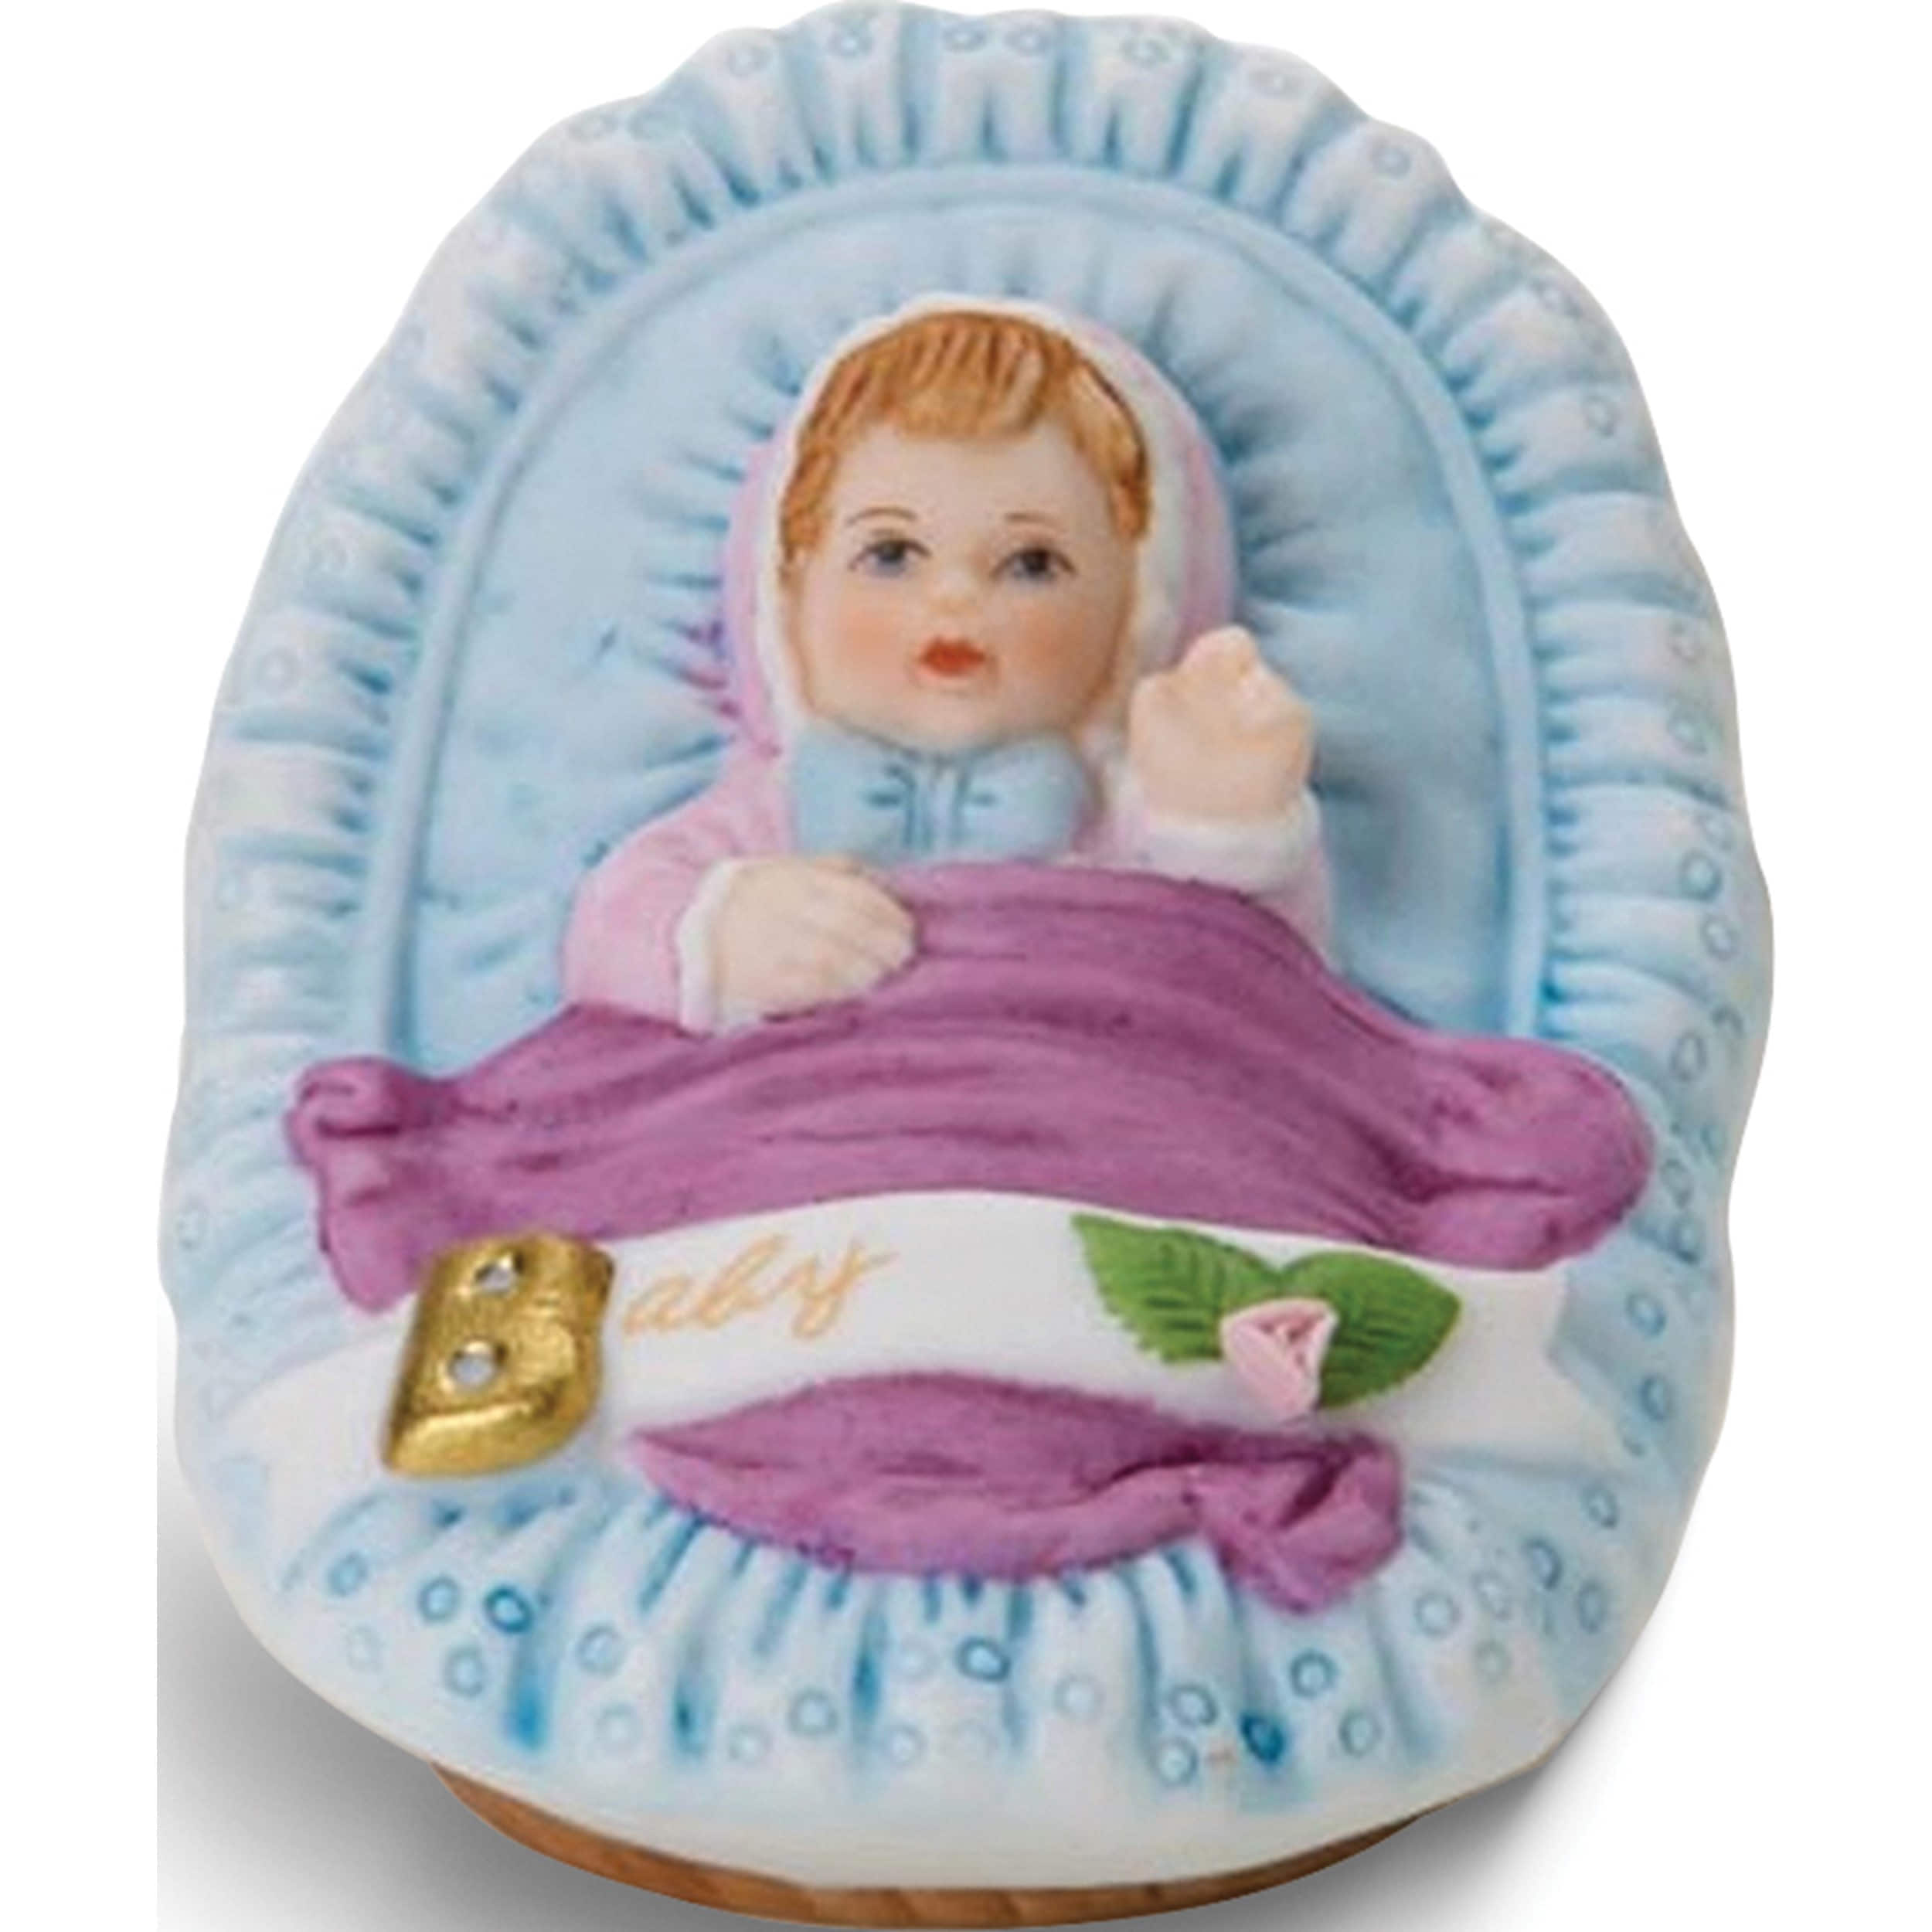 Fashion Blonde Newborn Baby Porcelain Figurine (3.29 X 2.9) Made In China gl643 - image 1 of 4